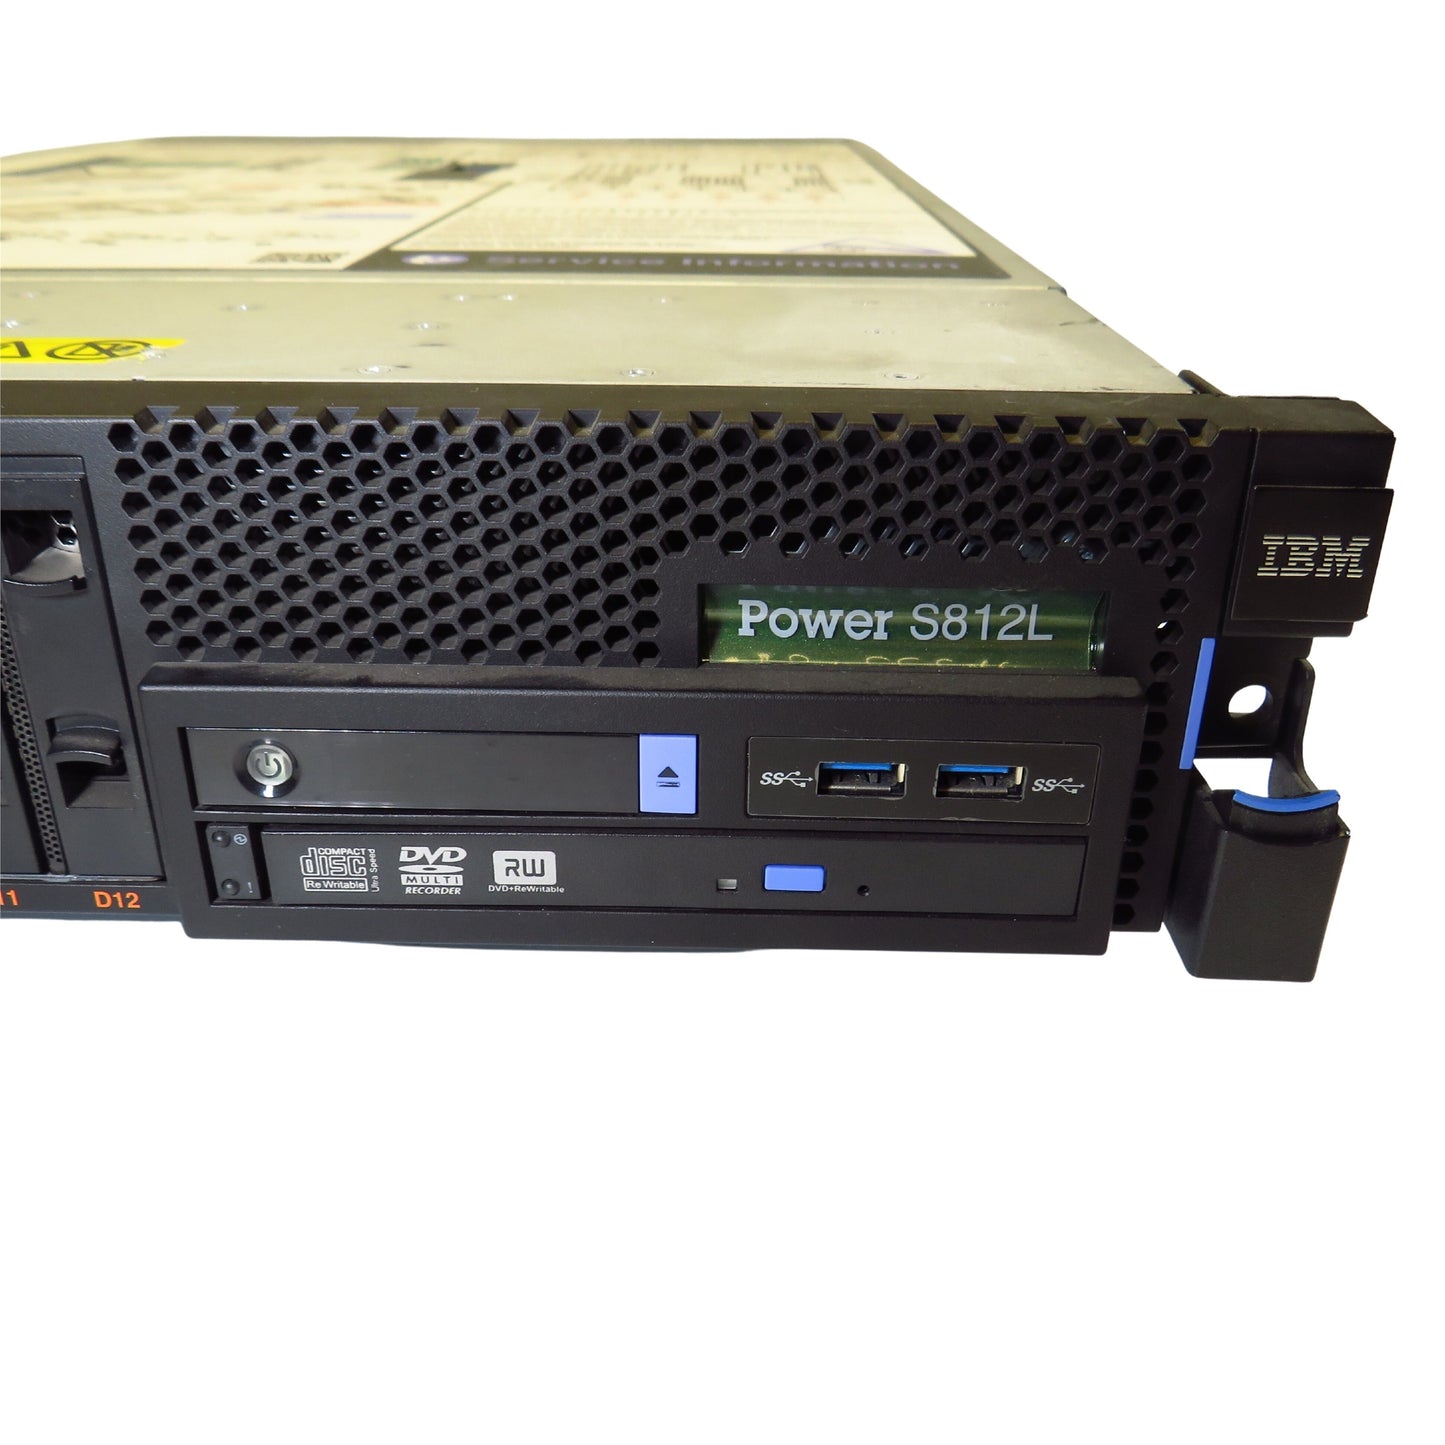 IBM 8247-21L S812L ELPD 10-core 3.42 GHz Power8 Processor Linux Server (Refurbished)